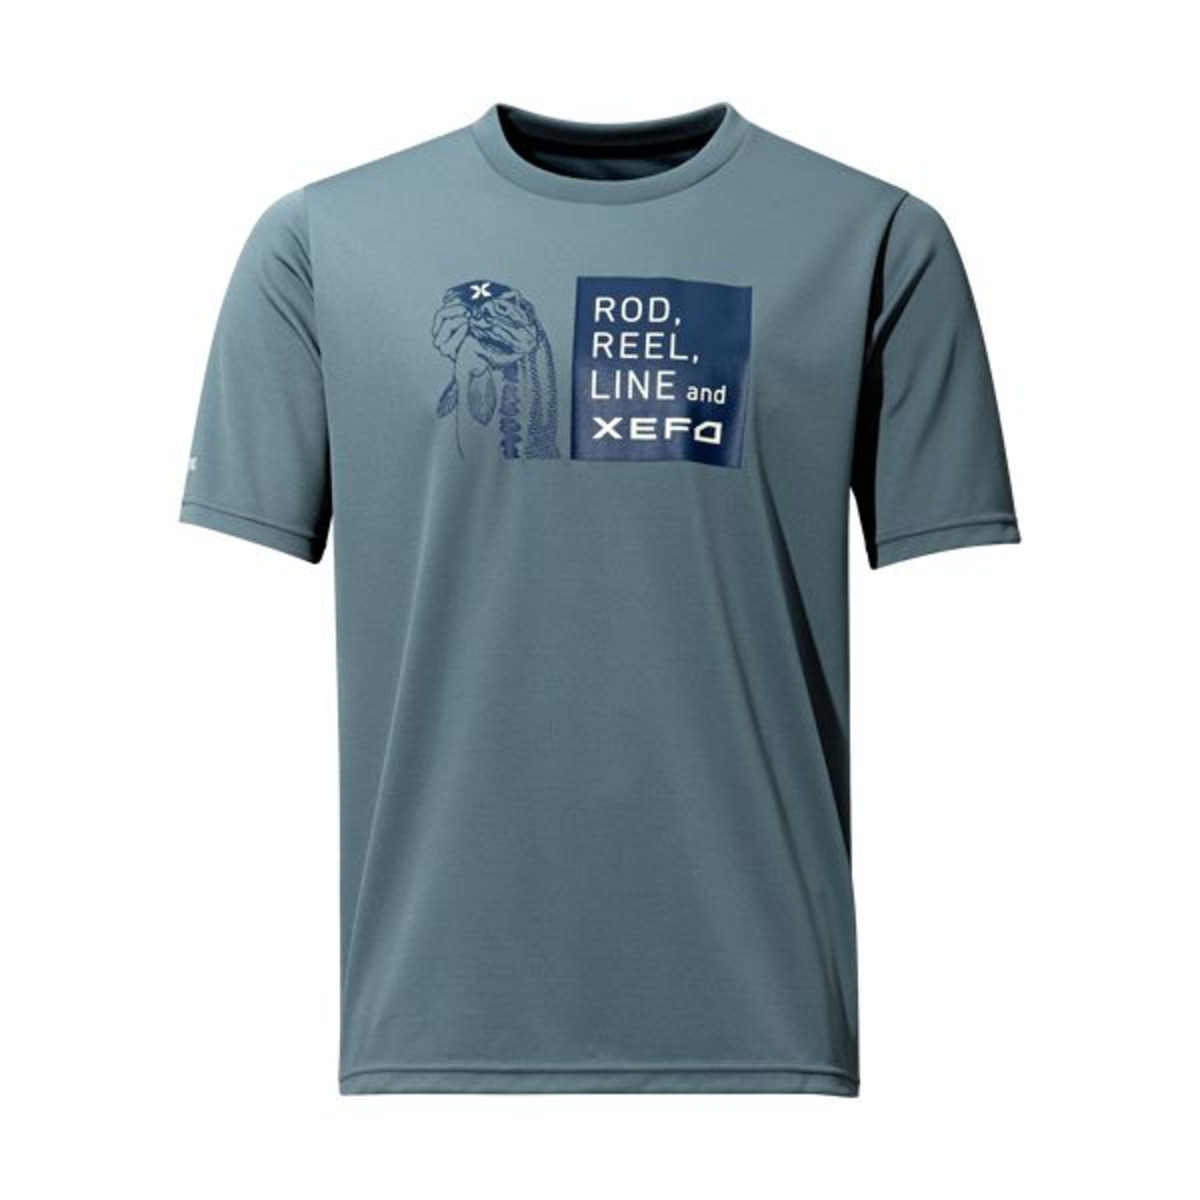 Shimano T-Shirt Manica Corta Xefo - L - Cadet Blue